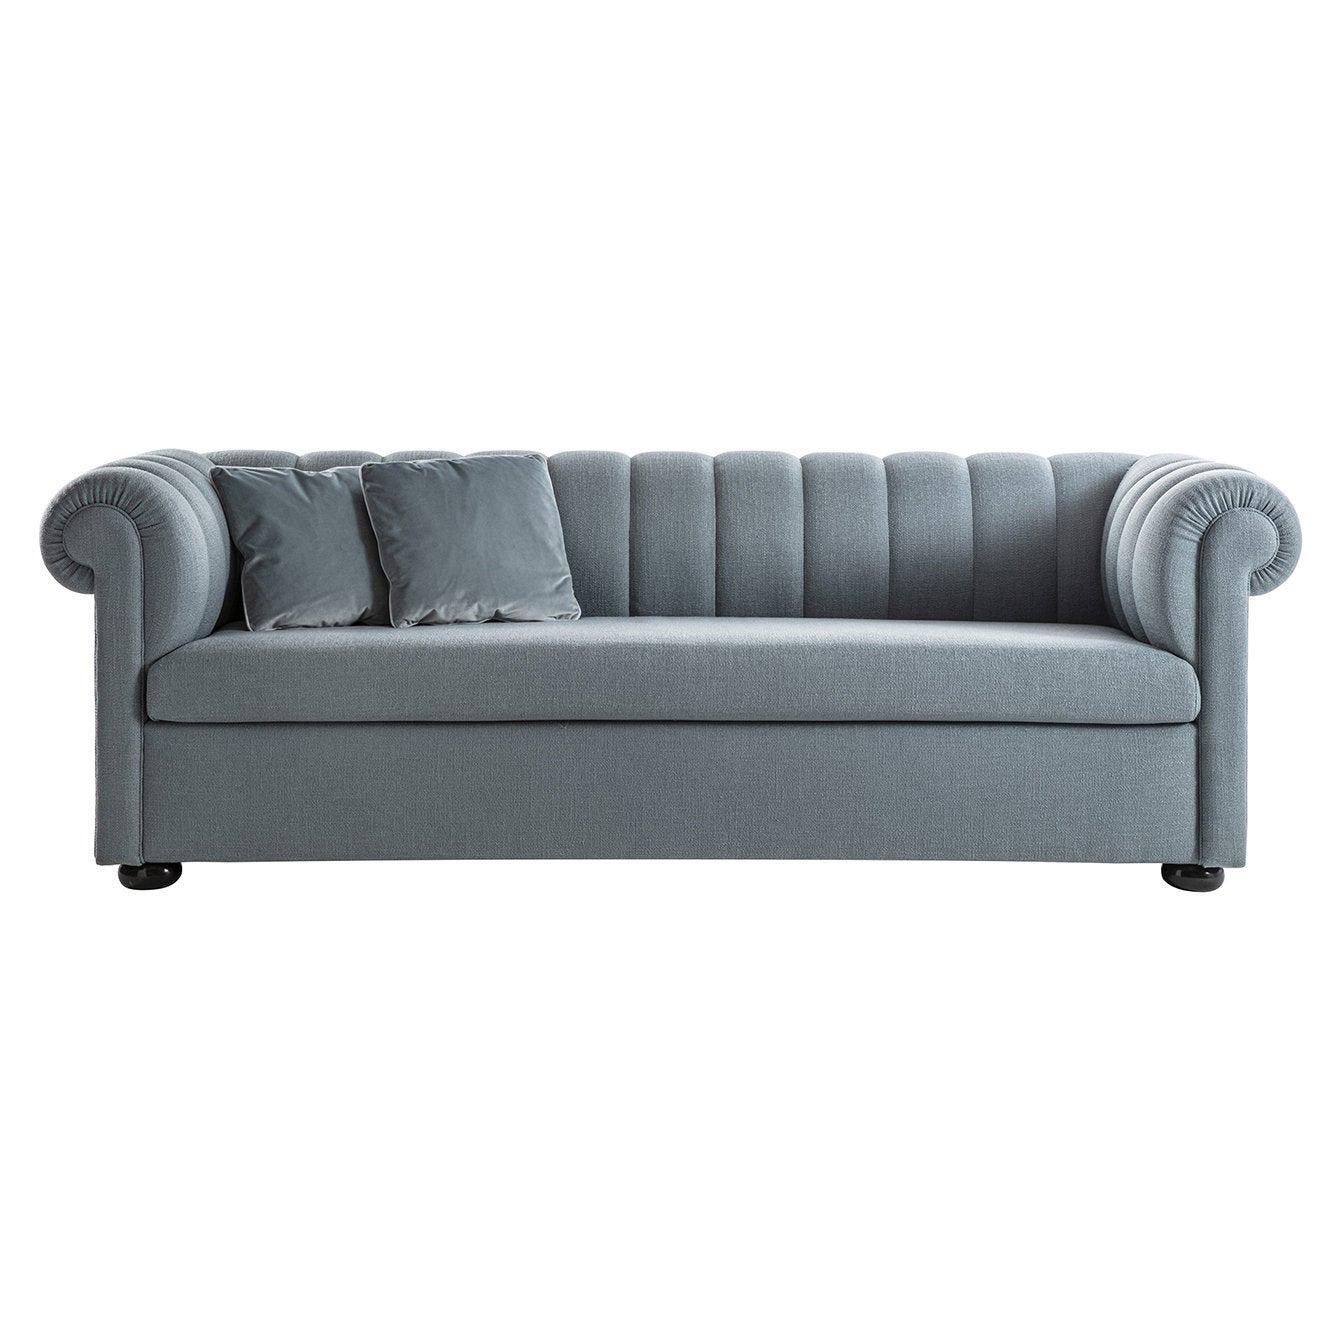 Giorgio Gray Sofa Bed For Sale